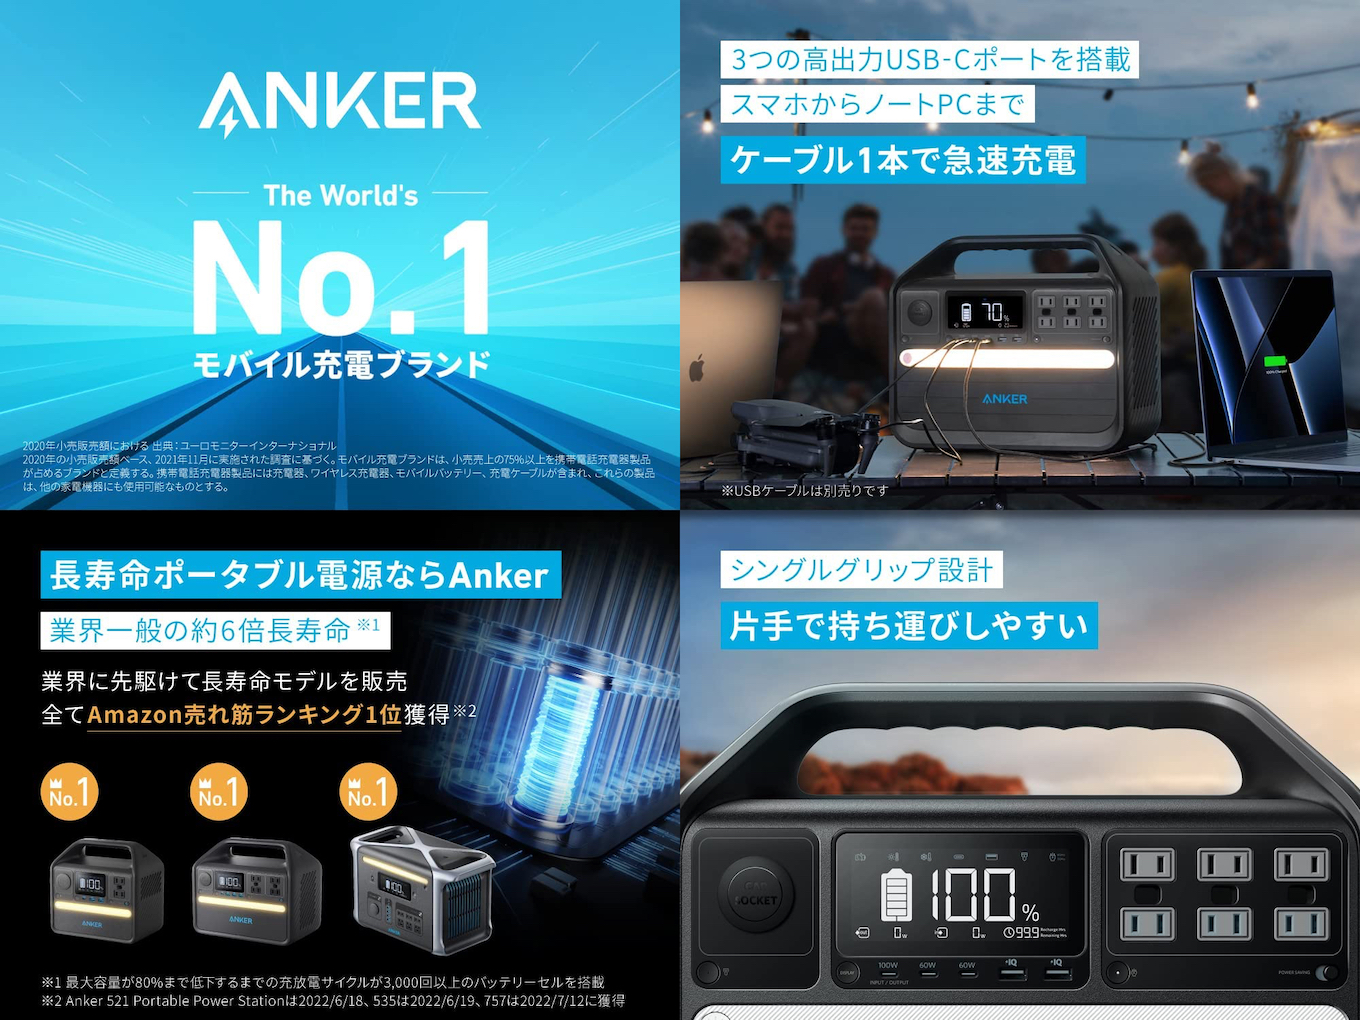 Anker 555 Portable Power Station